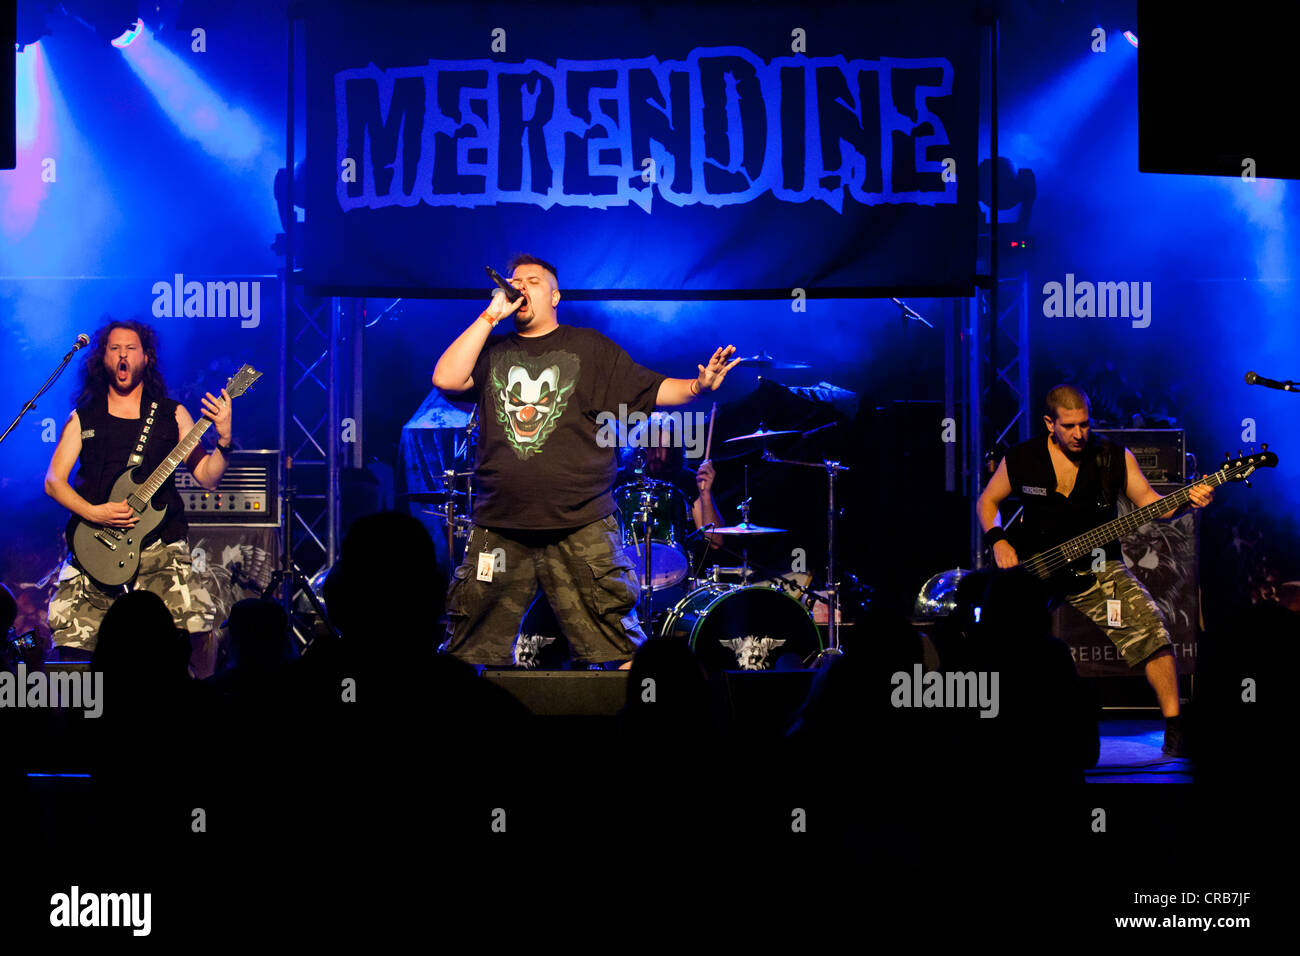 Italian heavy rock band Merendine performing live in the Schueuer concert hall in Lucerne, Switzerland, Europe Stock Photo